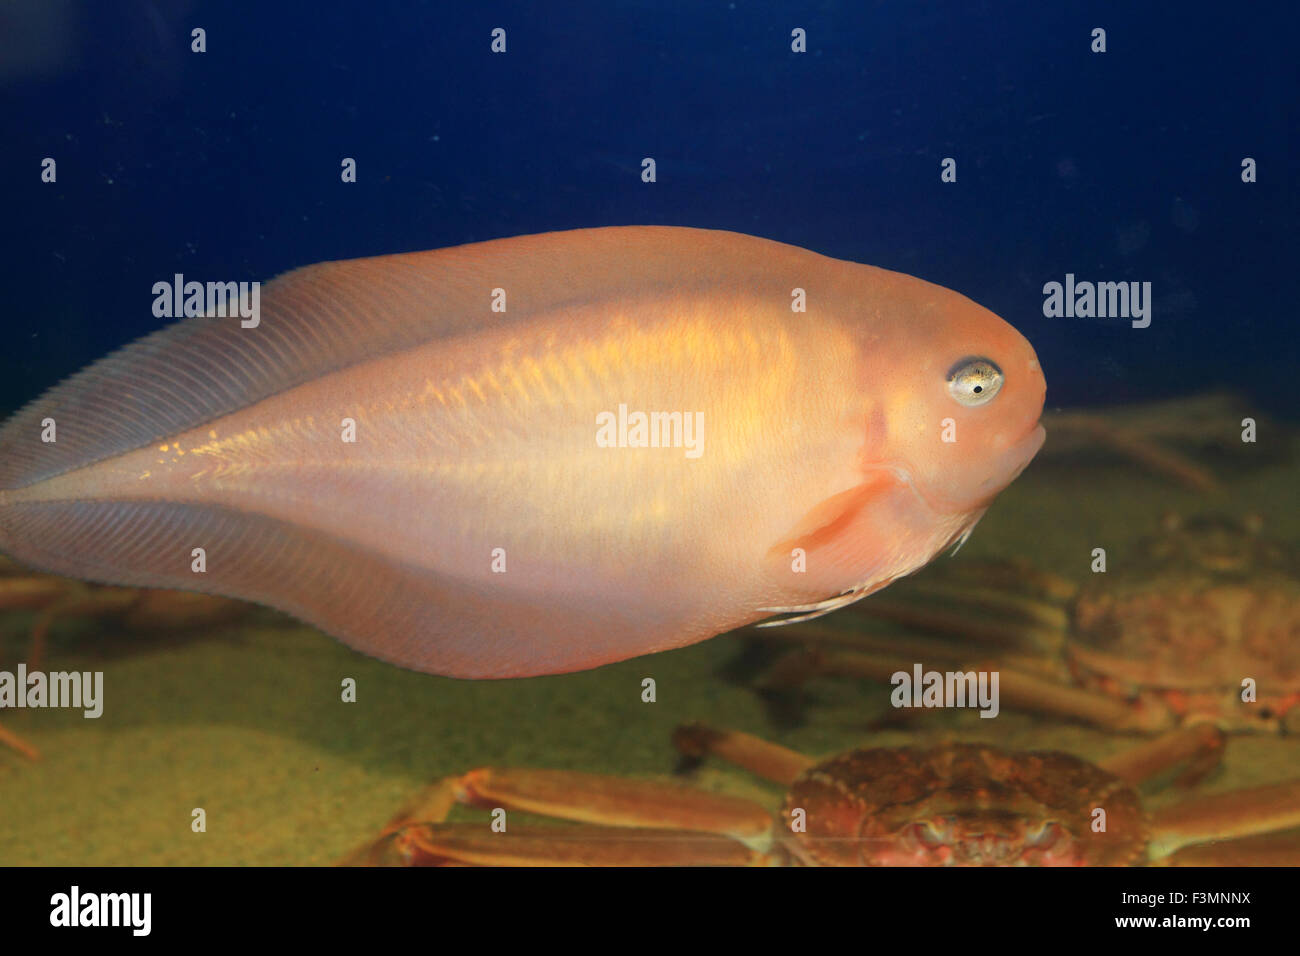 Salmon Snailfish (Careproctus rastrinus) in Japan Stock Photo